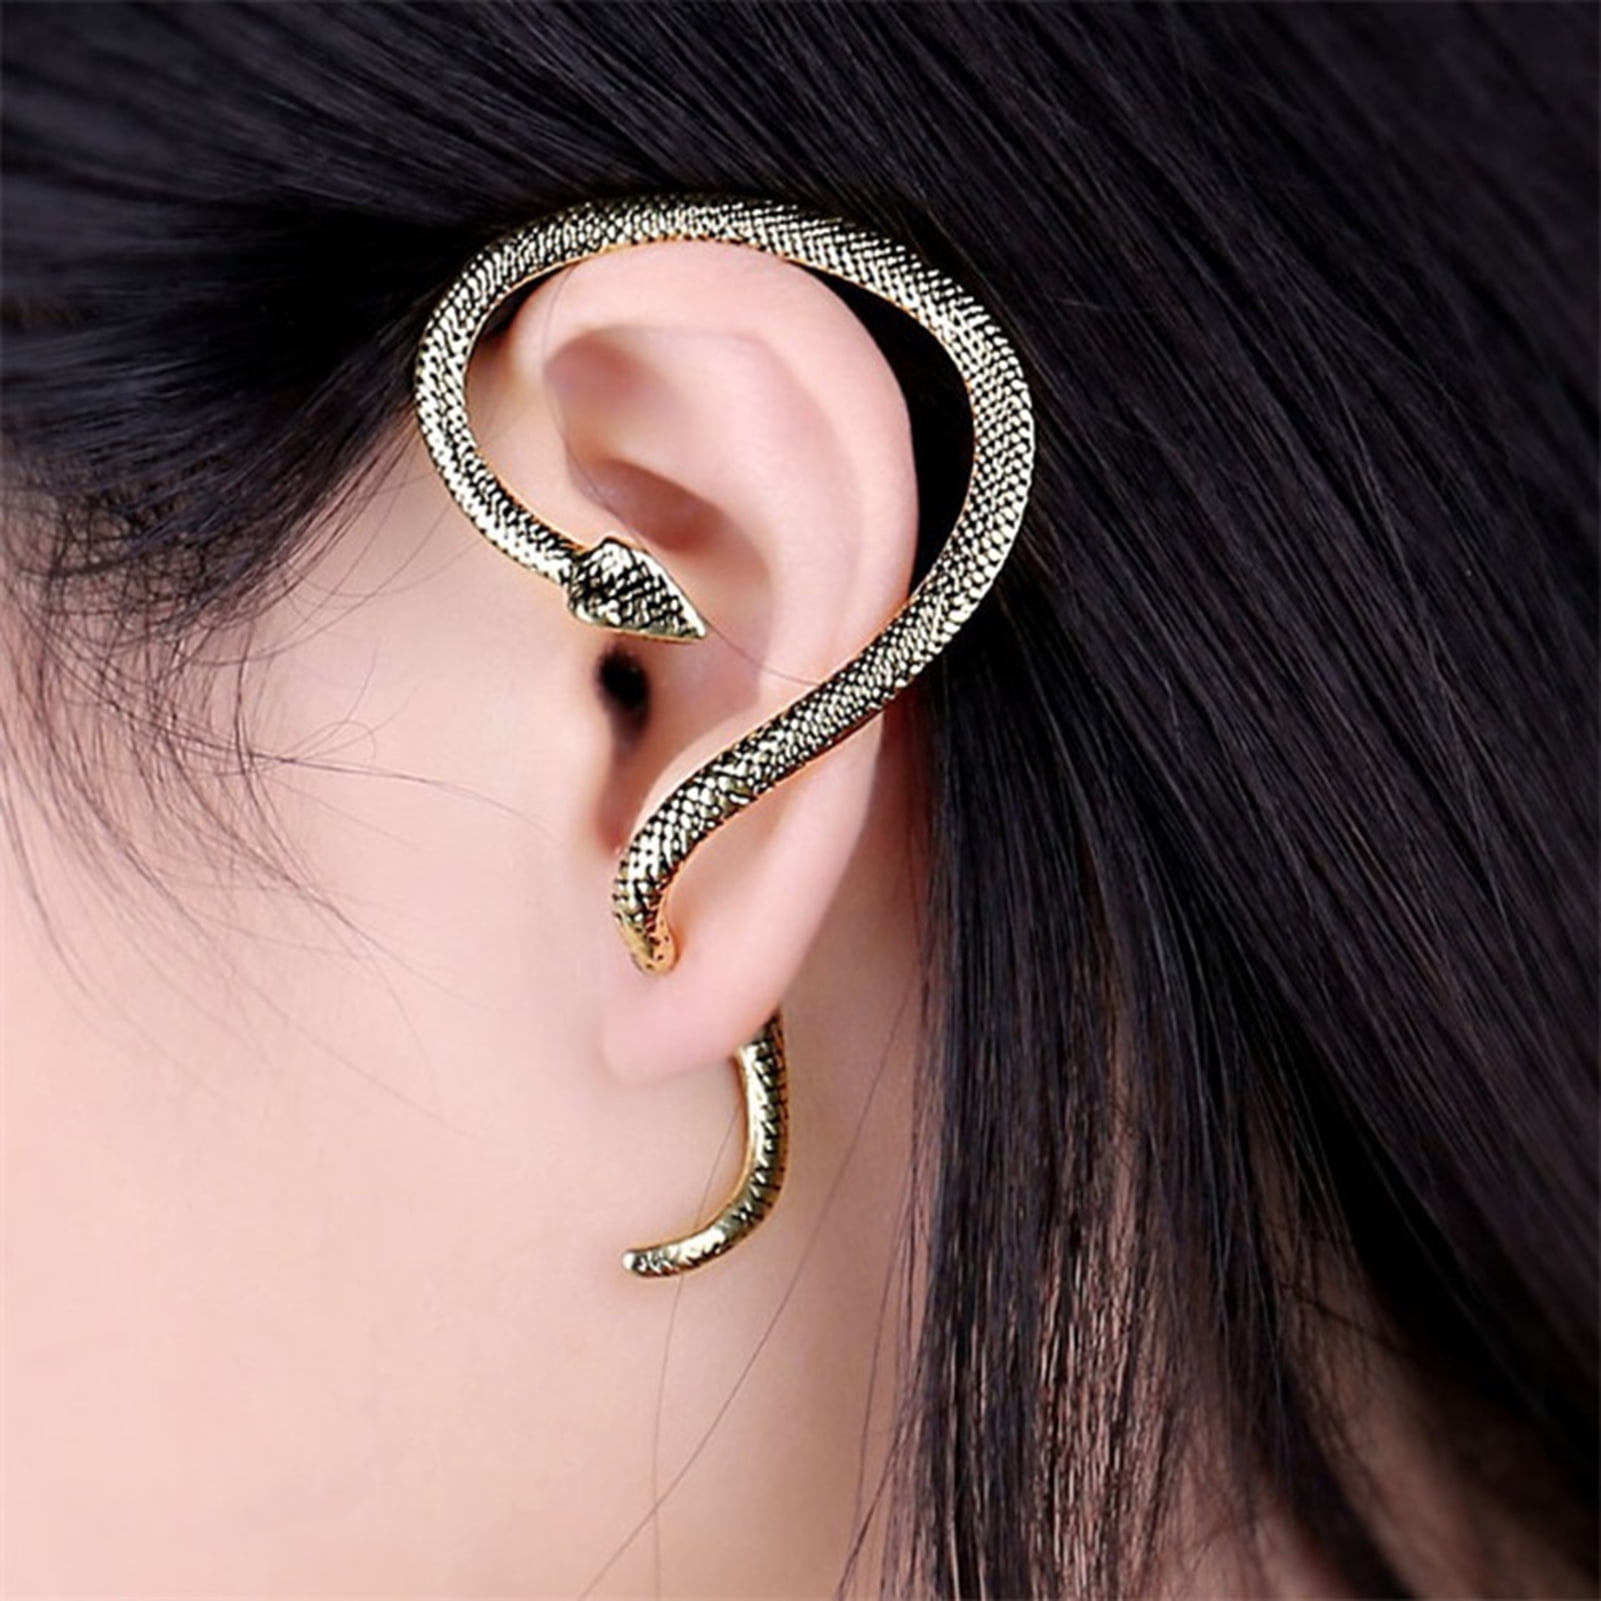 Fashionable Style Silver Tone Snake Animal Swirl Design Post Back Stud Earrings